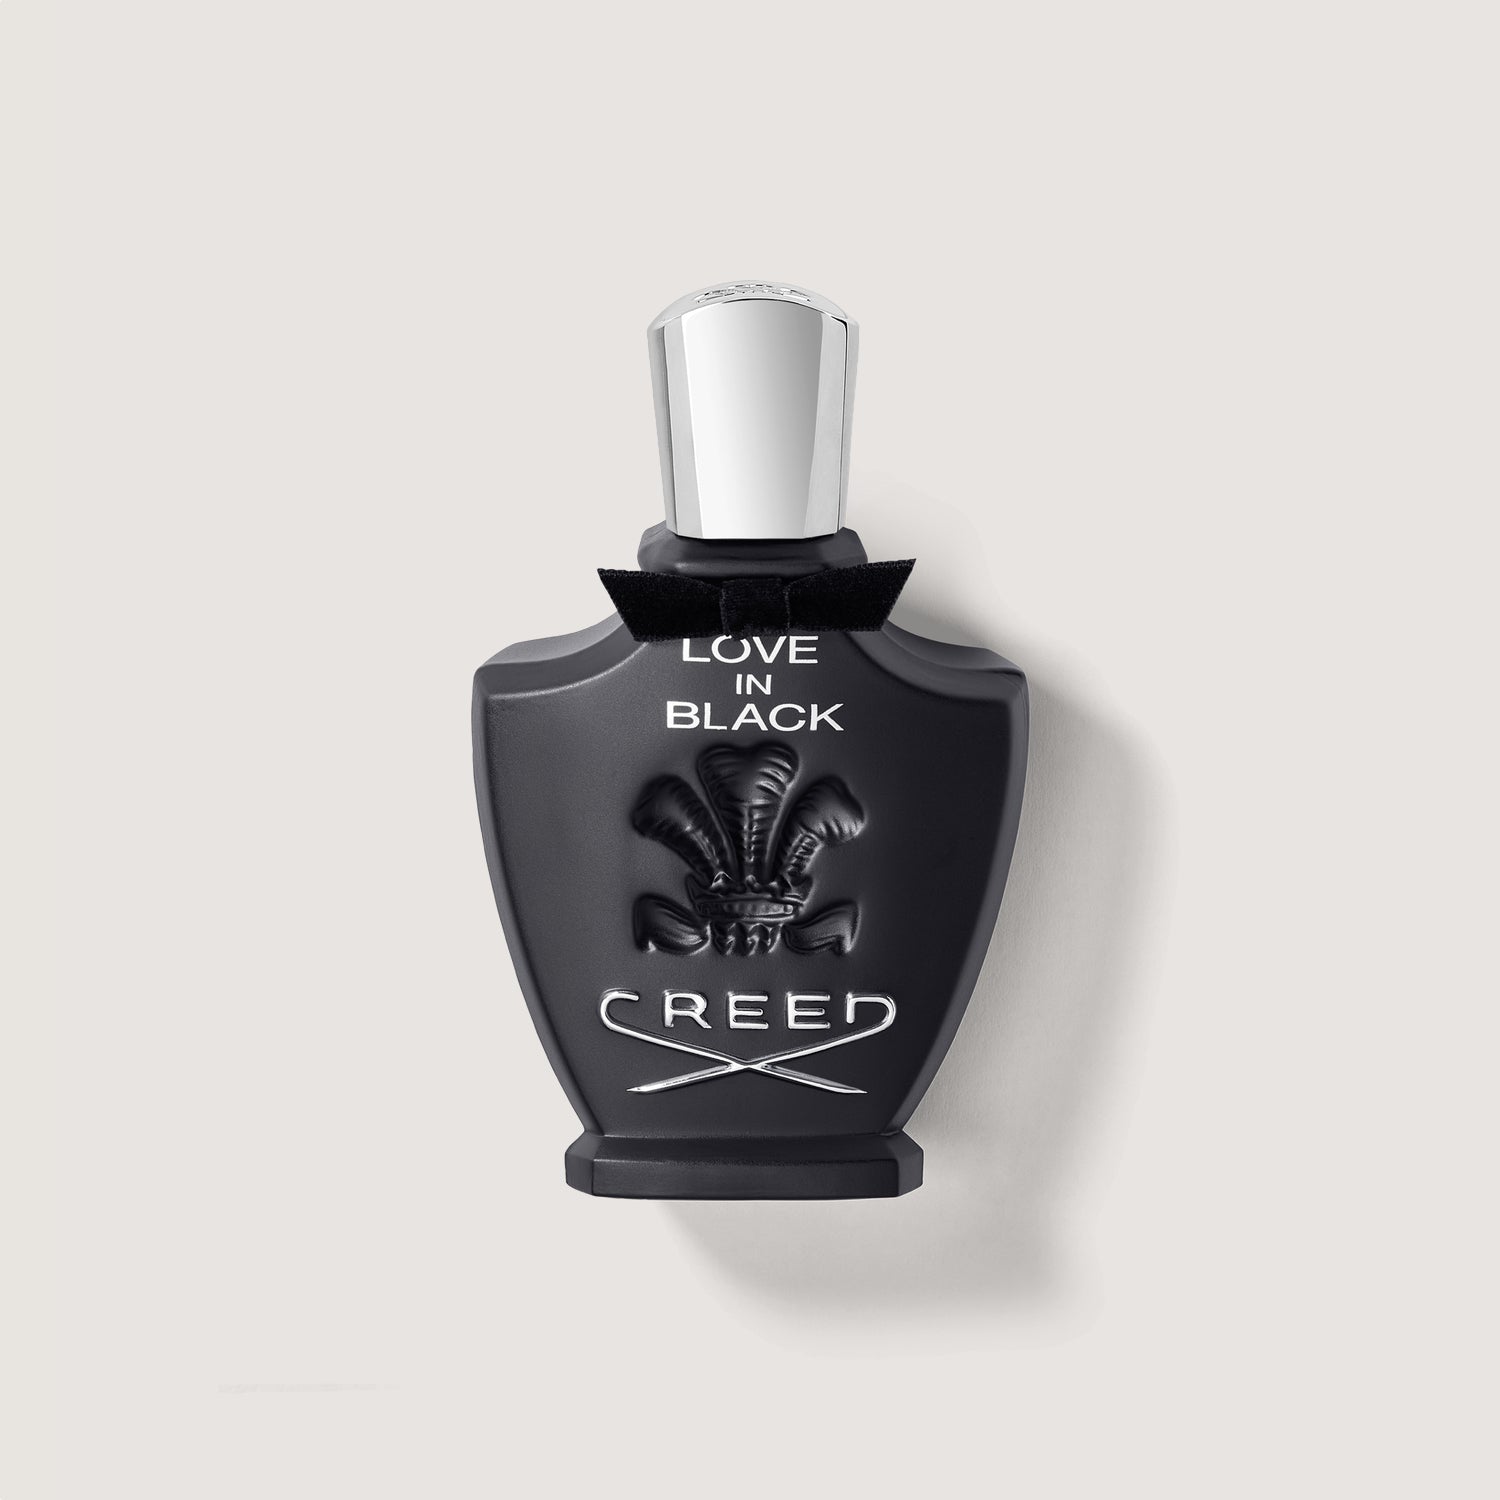 Love in Black by Creed 2.5oz Eau de Parfum Spray Women